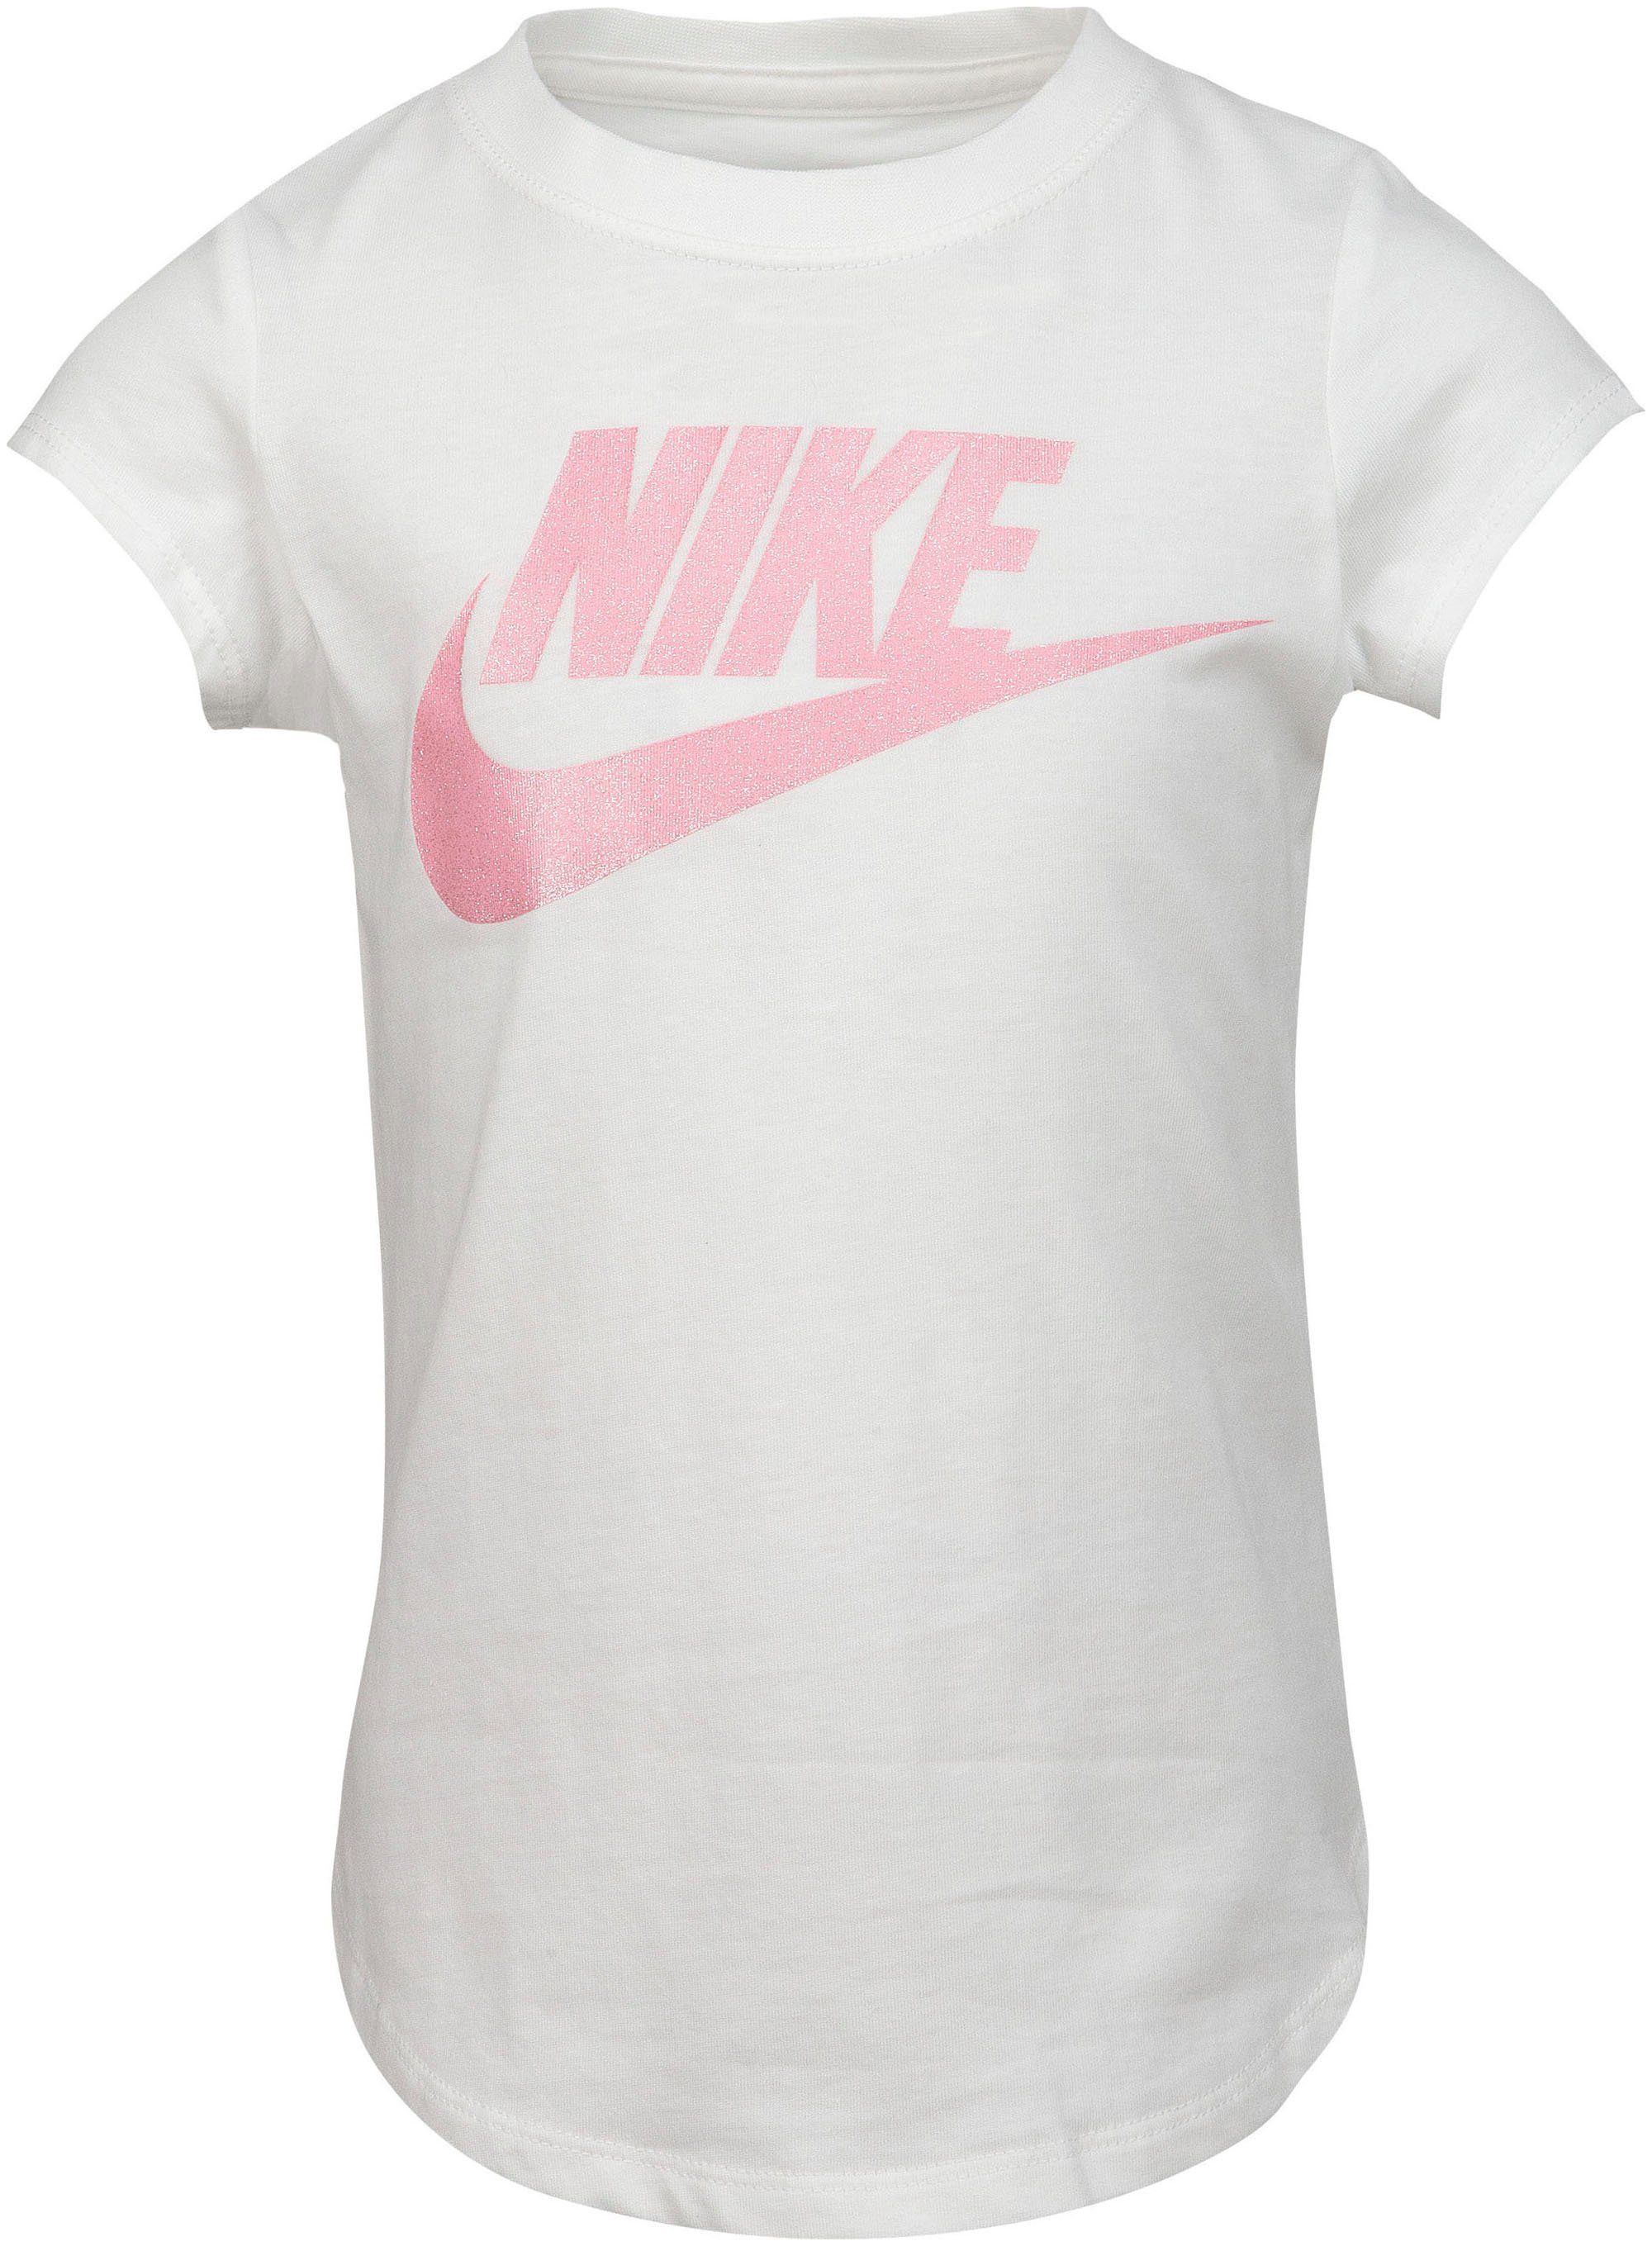 Absolut beliebt TEE - T-Shirt NIKE weiß SLEEVE Sportswear Nike FUTURA Kinder für SHORT